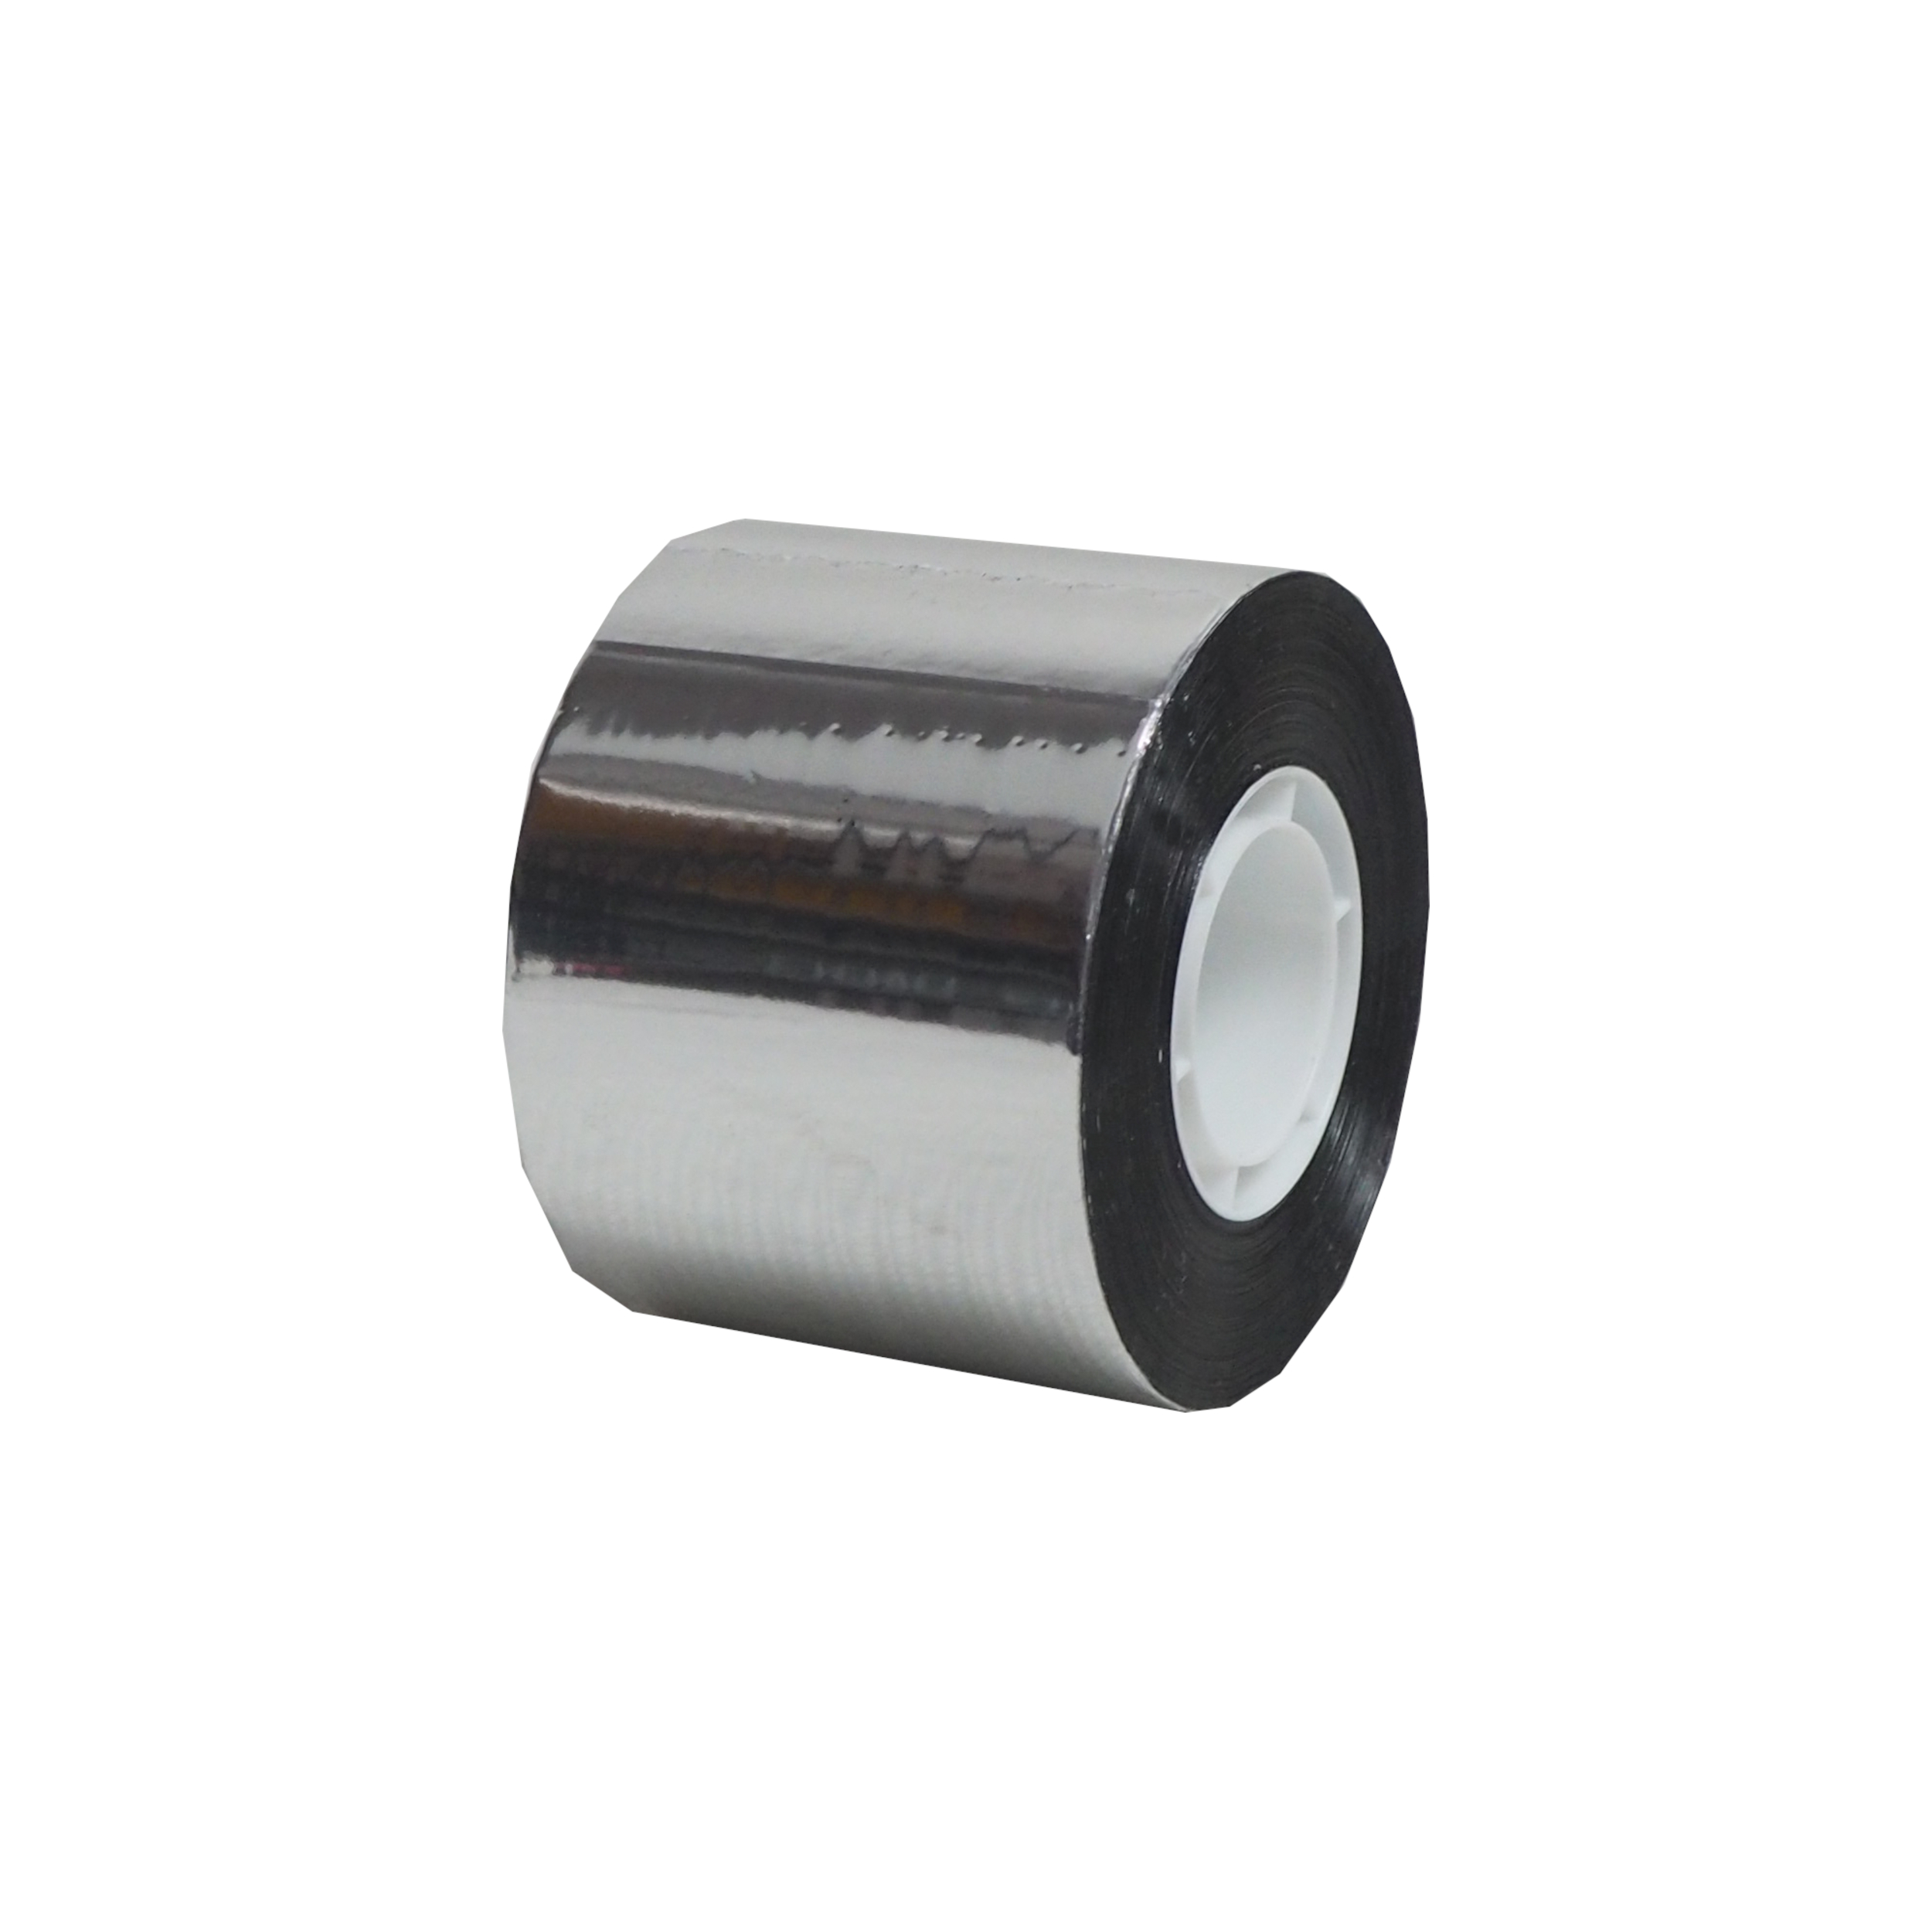 páska Alu tape PP, polypropylen napařený hliníkem, 50 mm x 50 m 0.13 Kg TOP Sklad4 701024 93